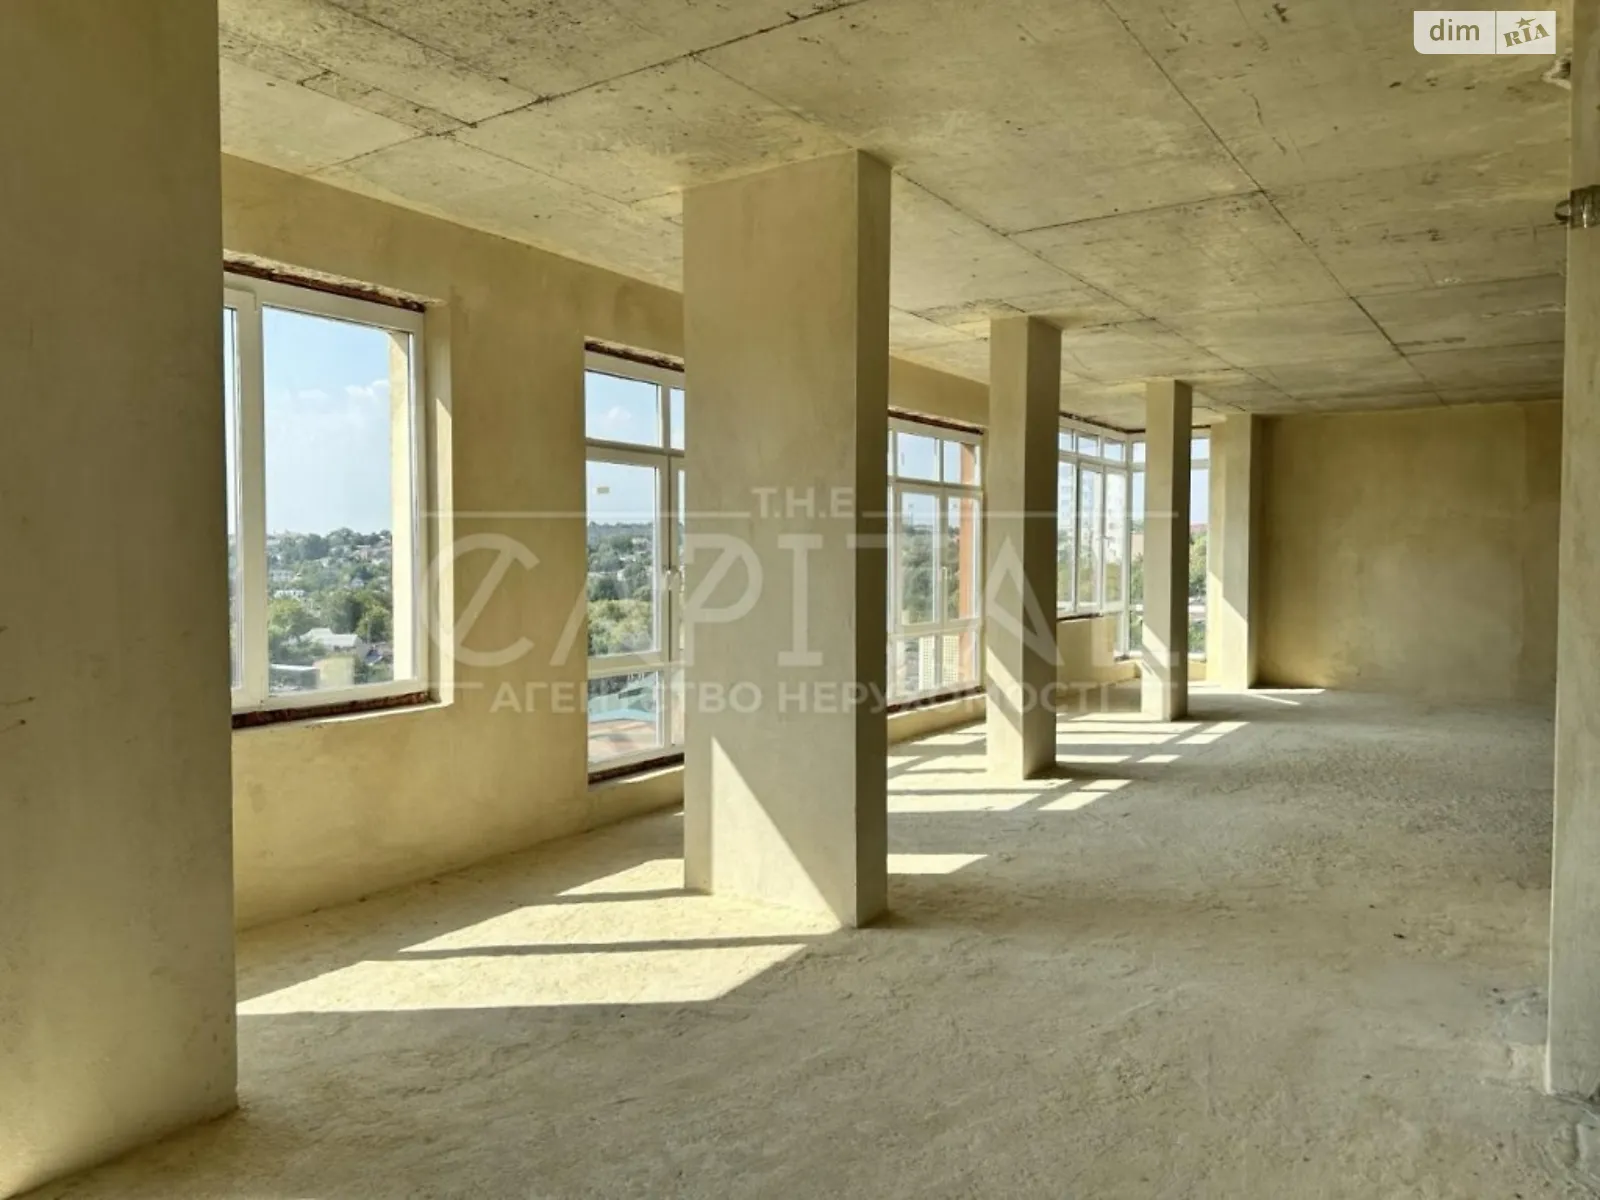 Продается 1-комнатная квартира 45.04 кв. м в Умани - фото 3